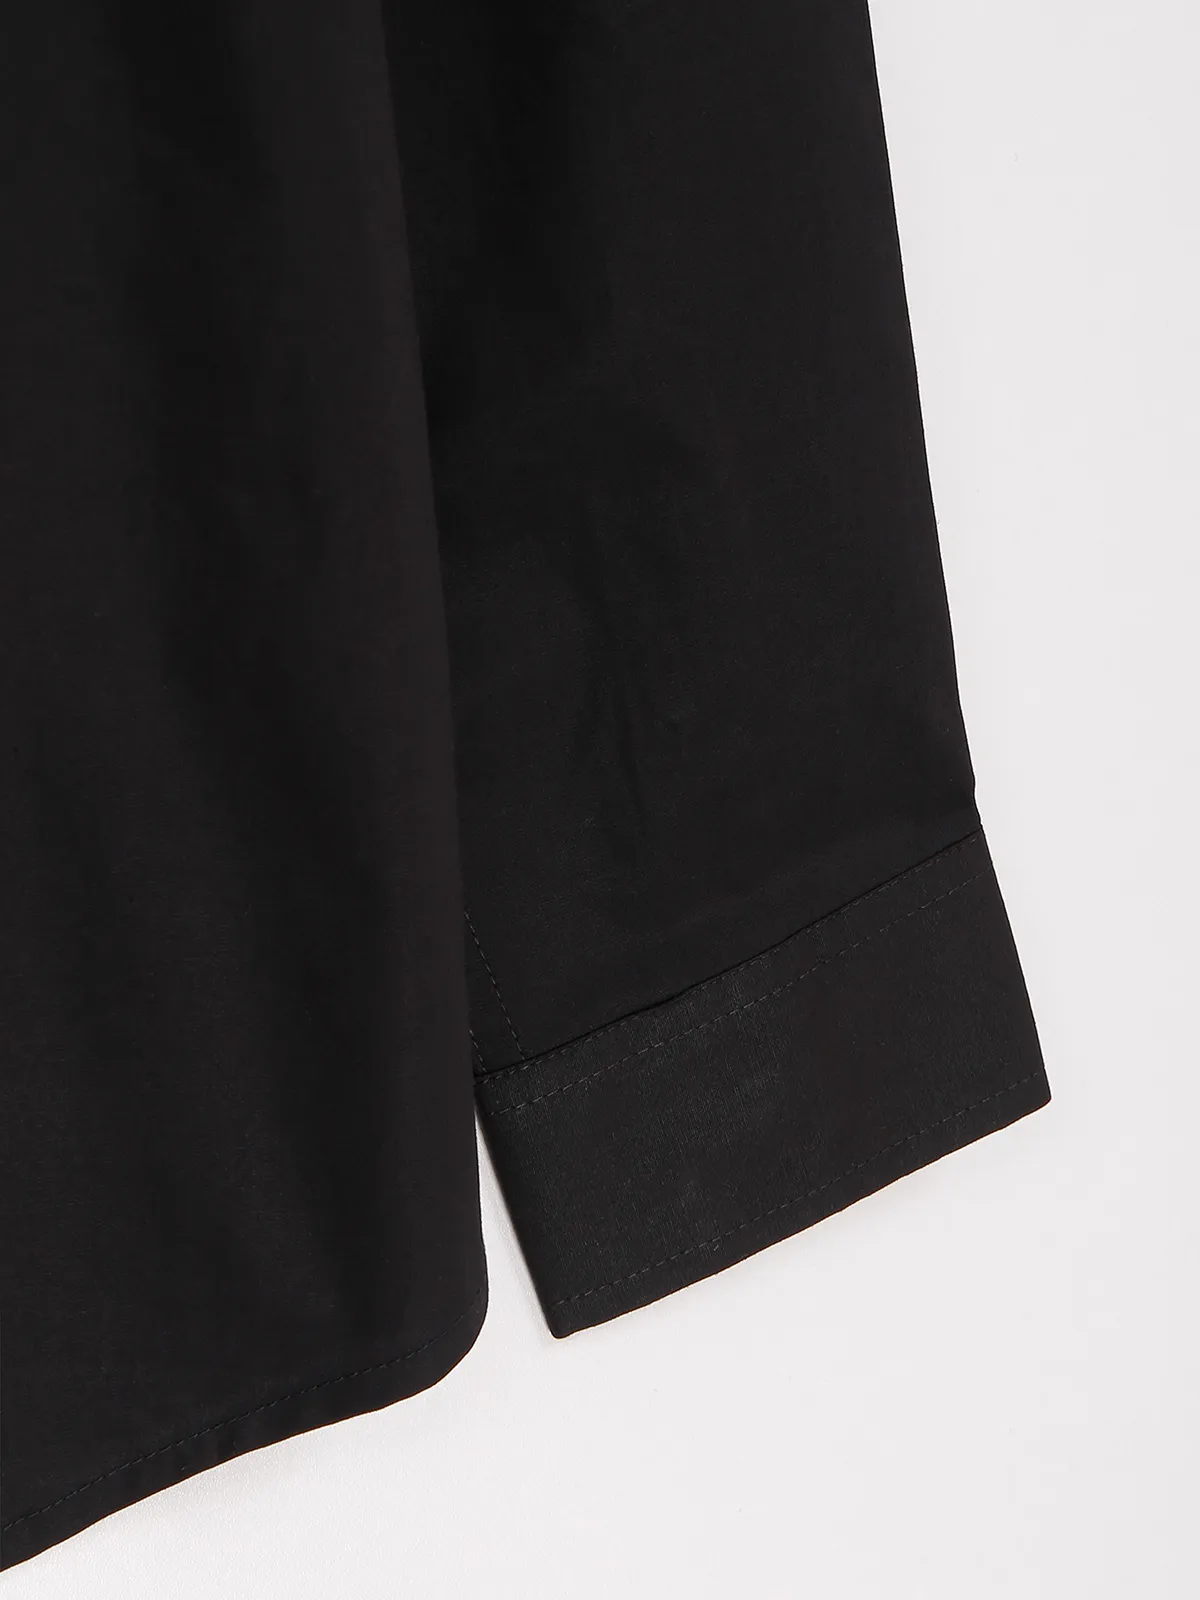 UCB black plain cotton casual shirt